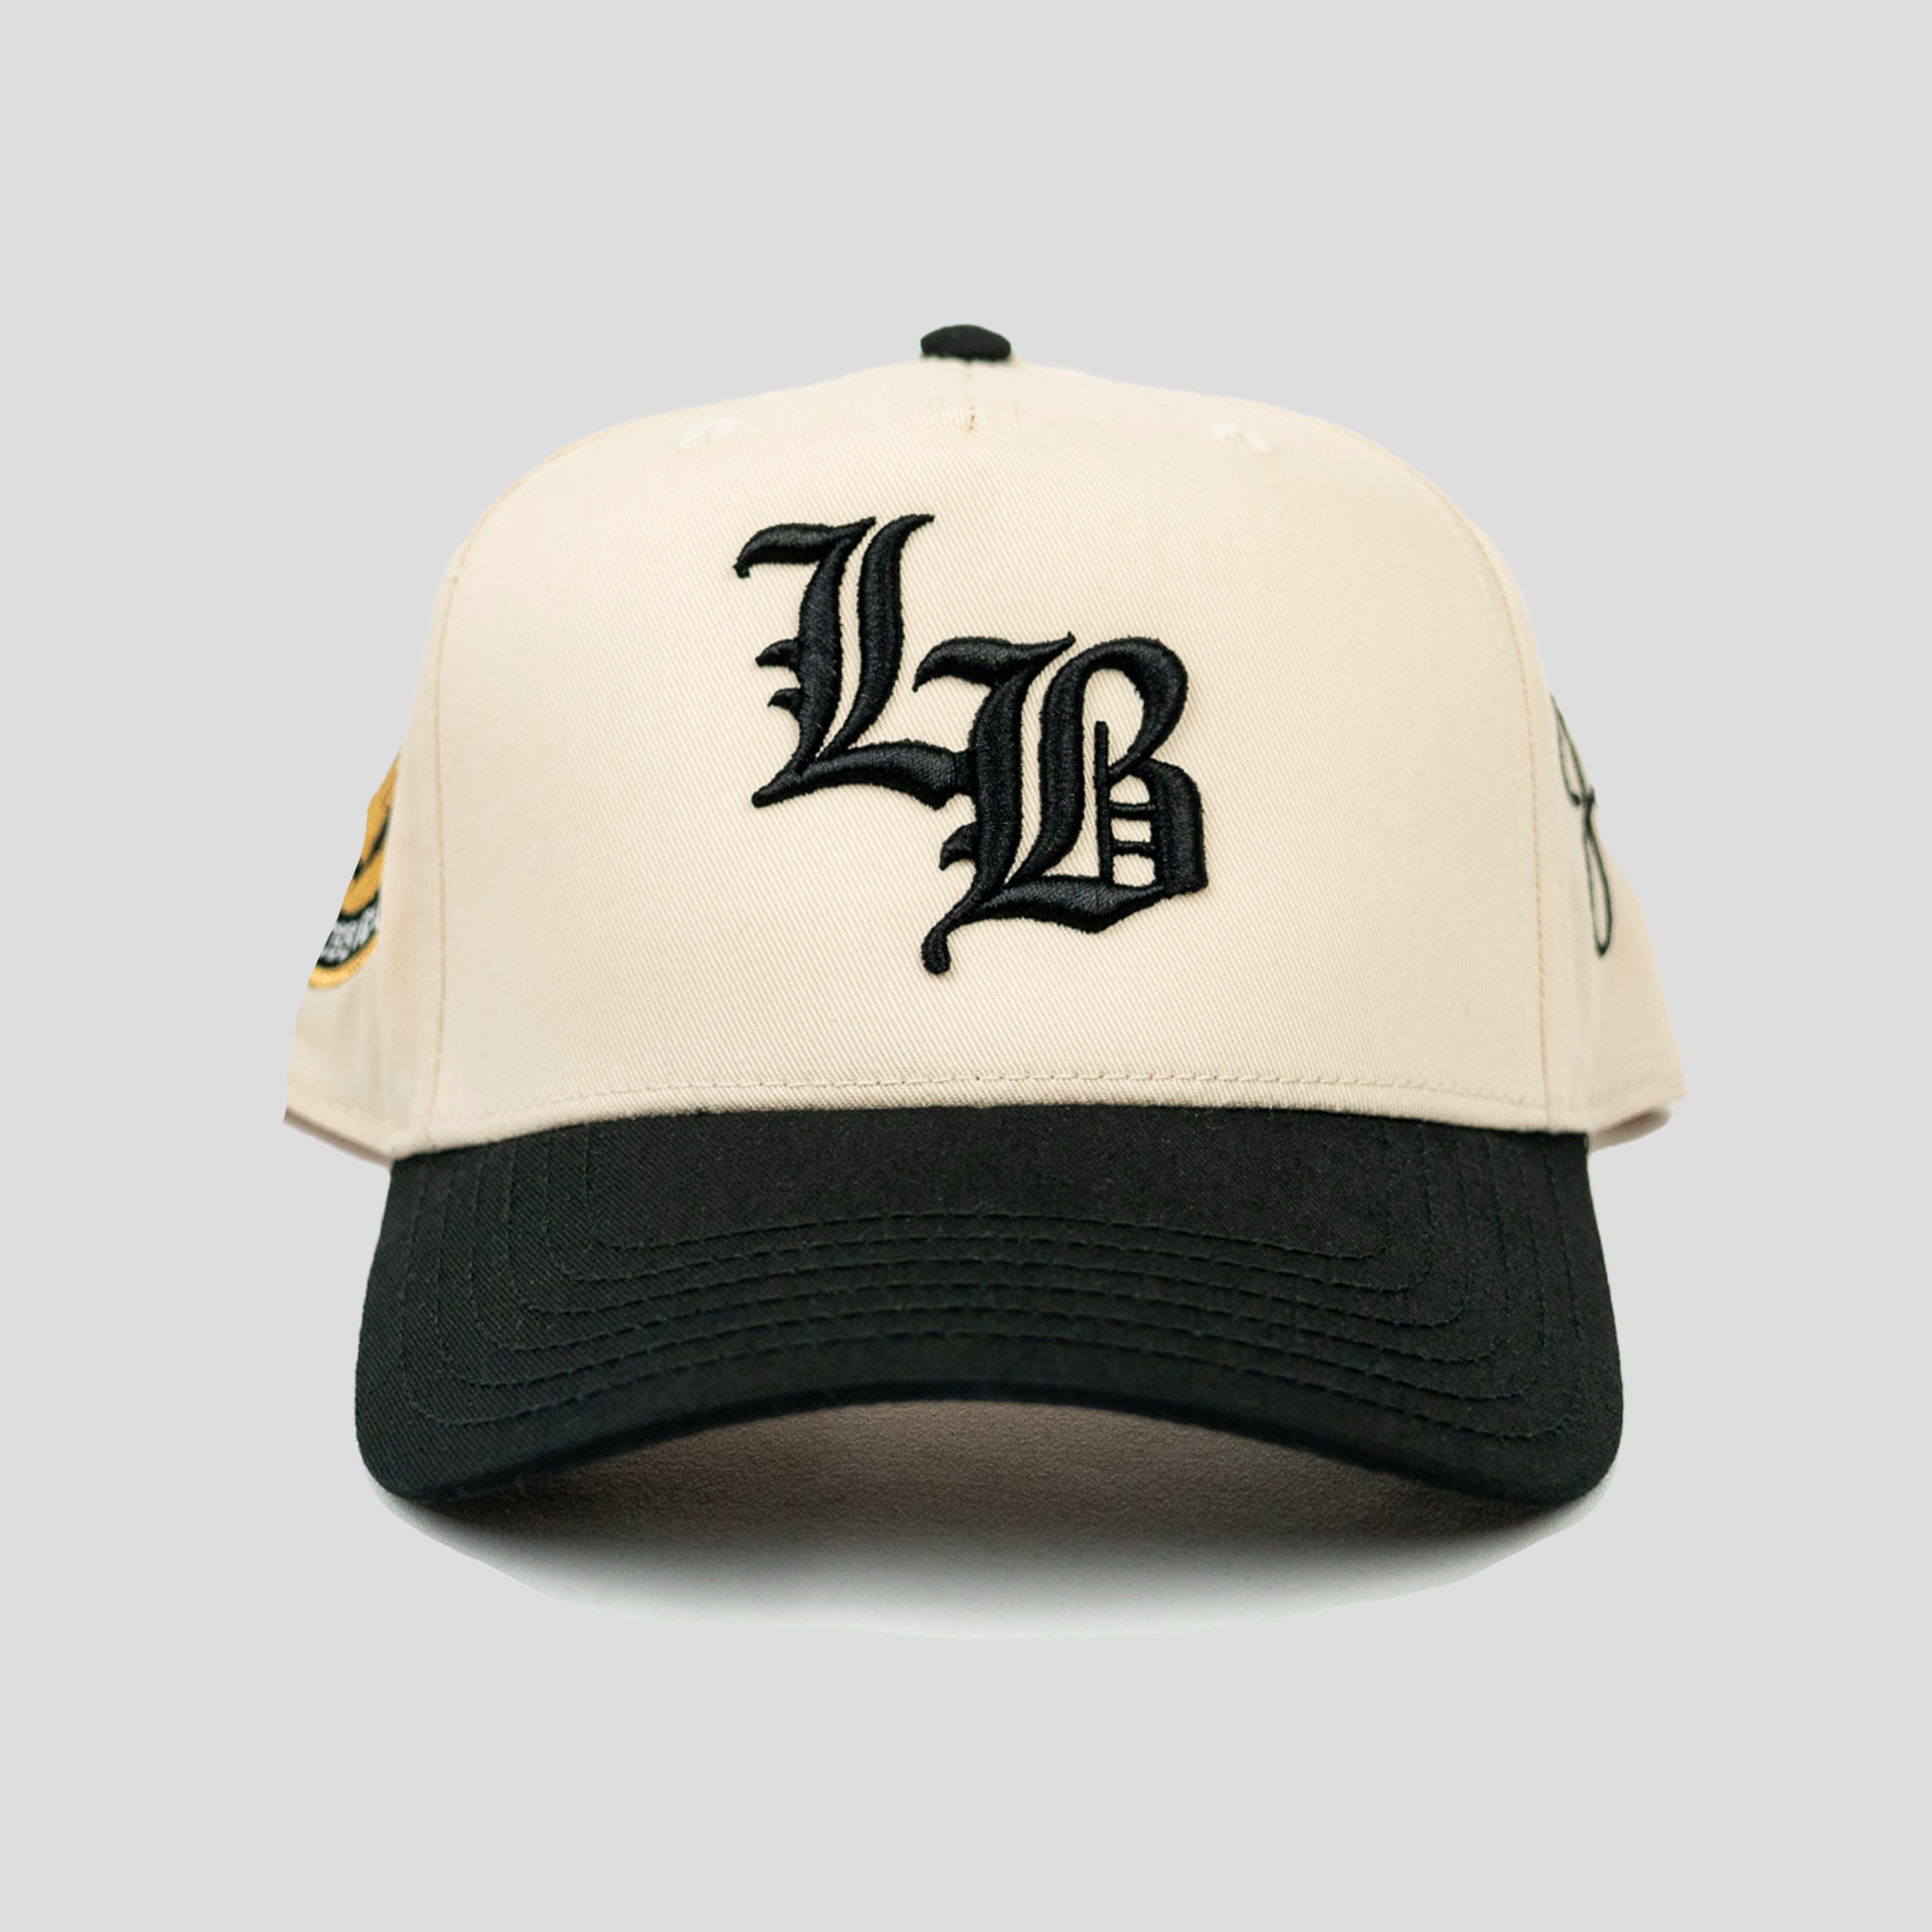 Jrip x LB Snapback Hat (CREAM/BLACK)